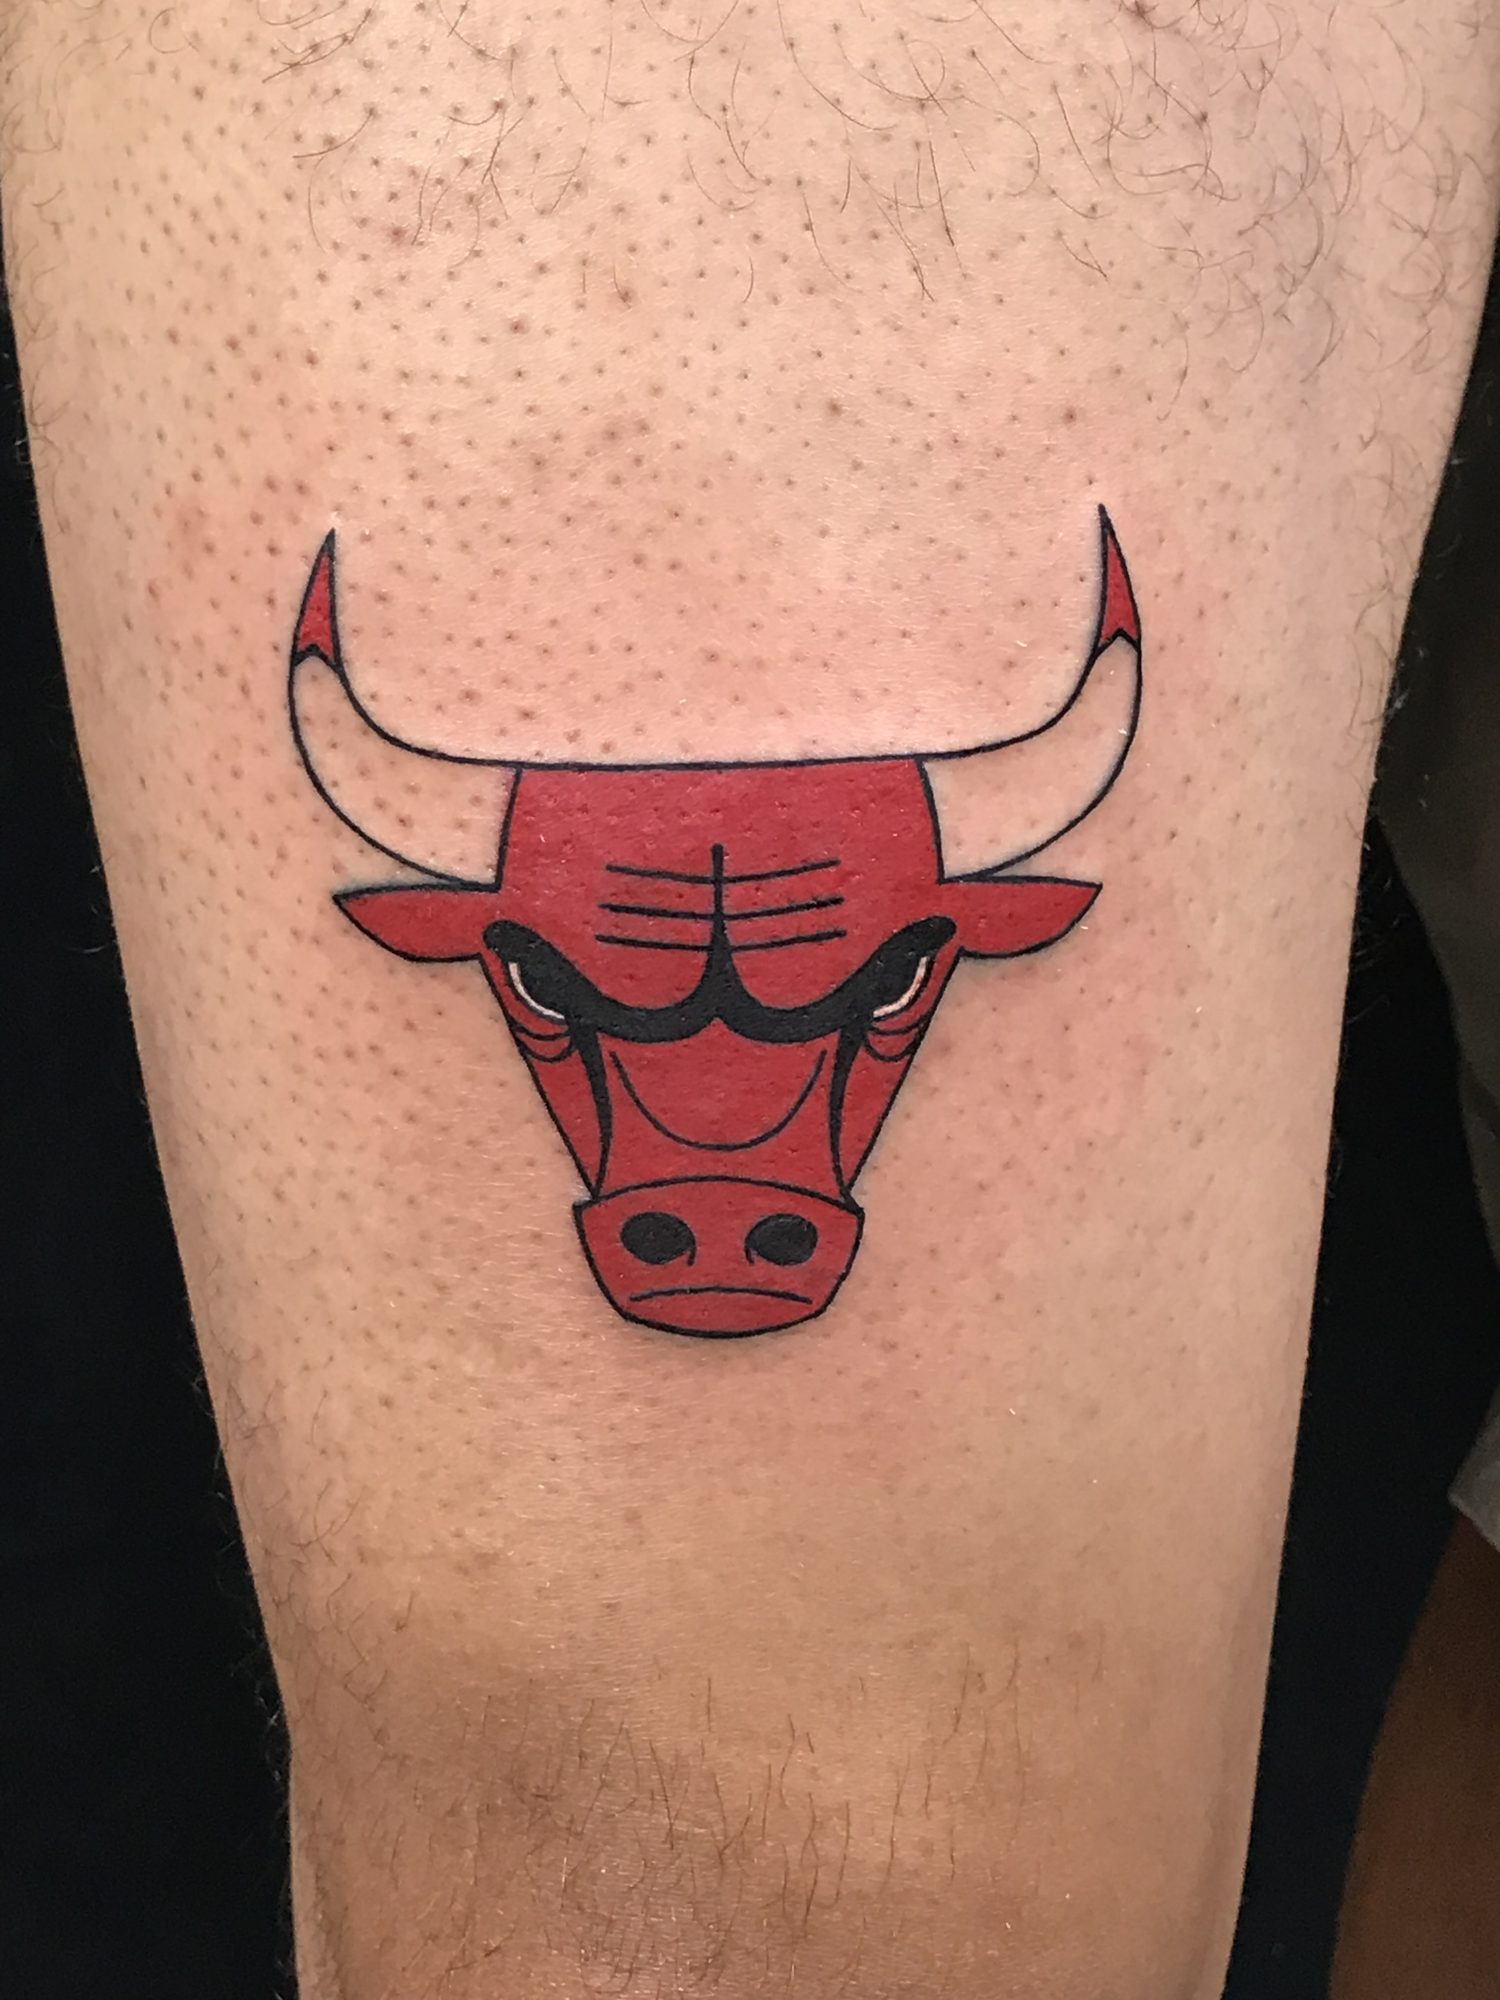 chicago bulls tattoo designs